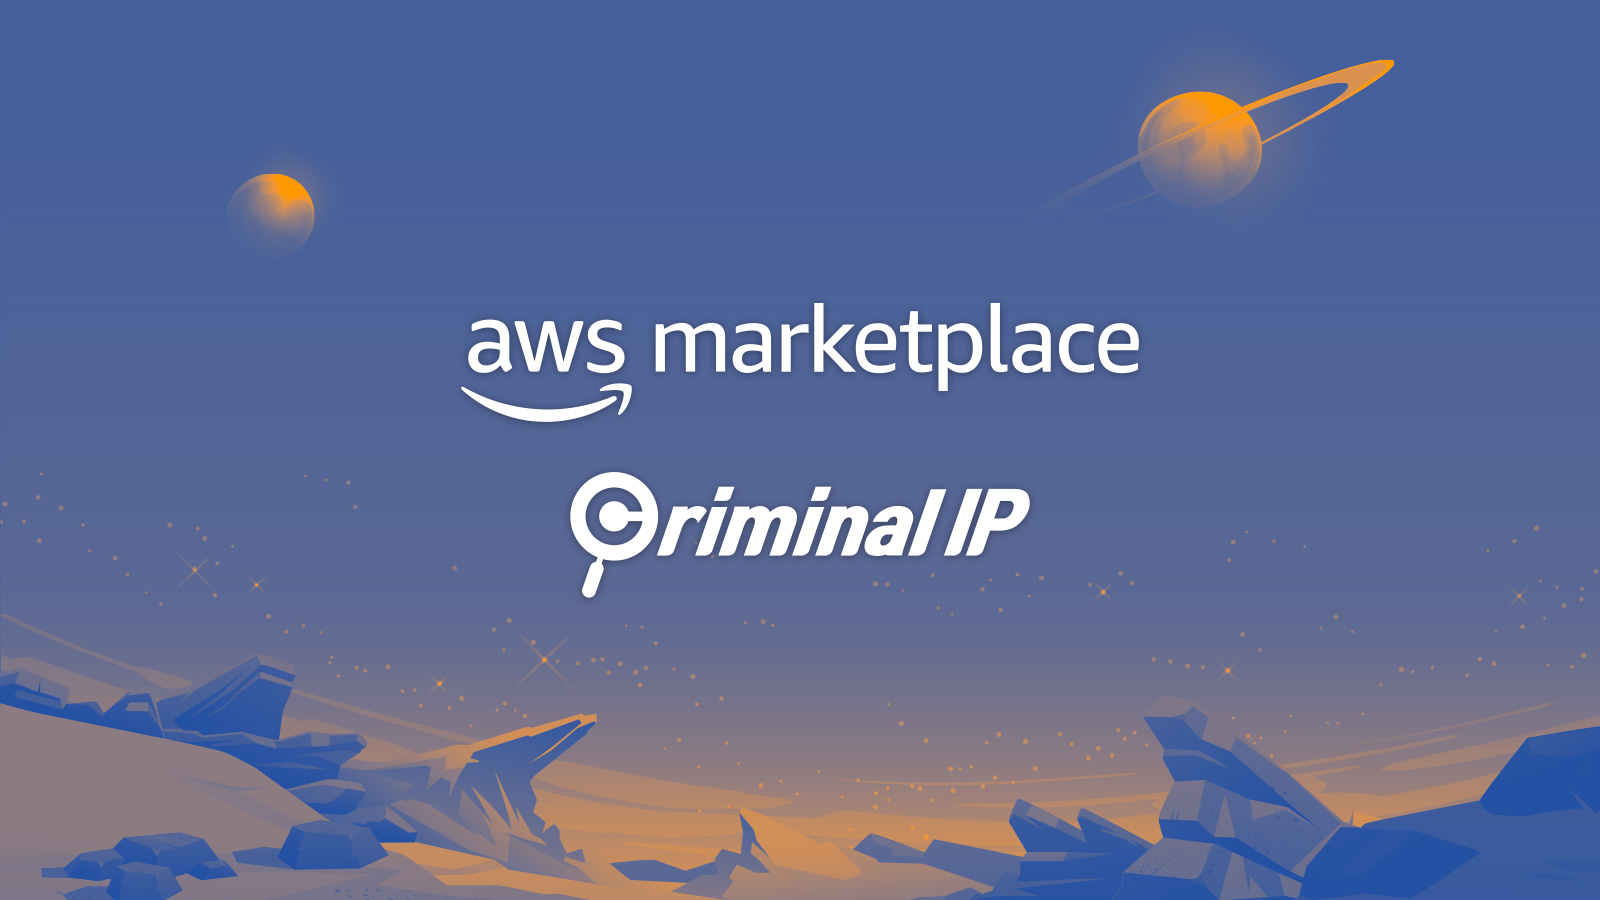 Criminal IP on AWS marketplace header